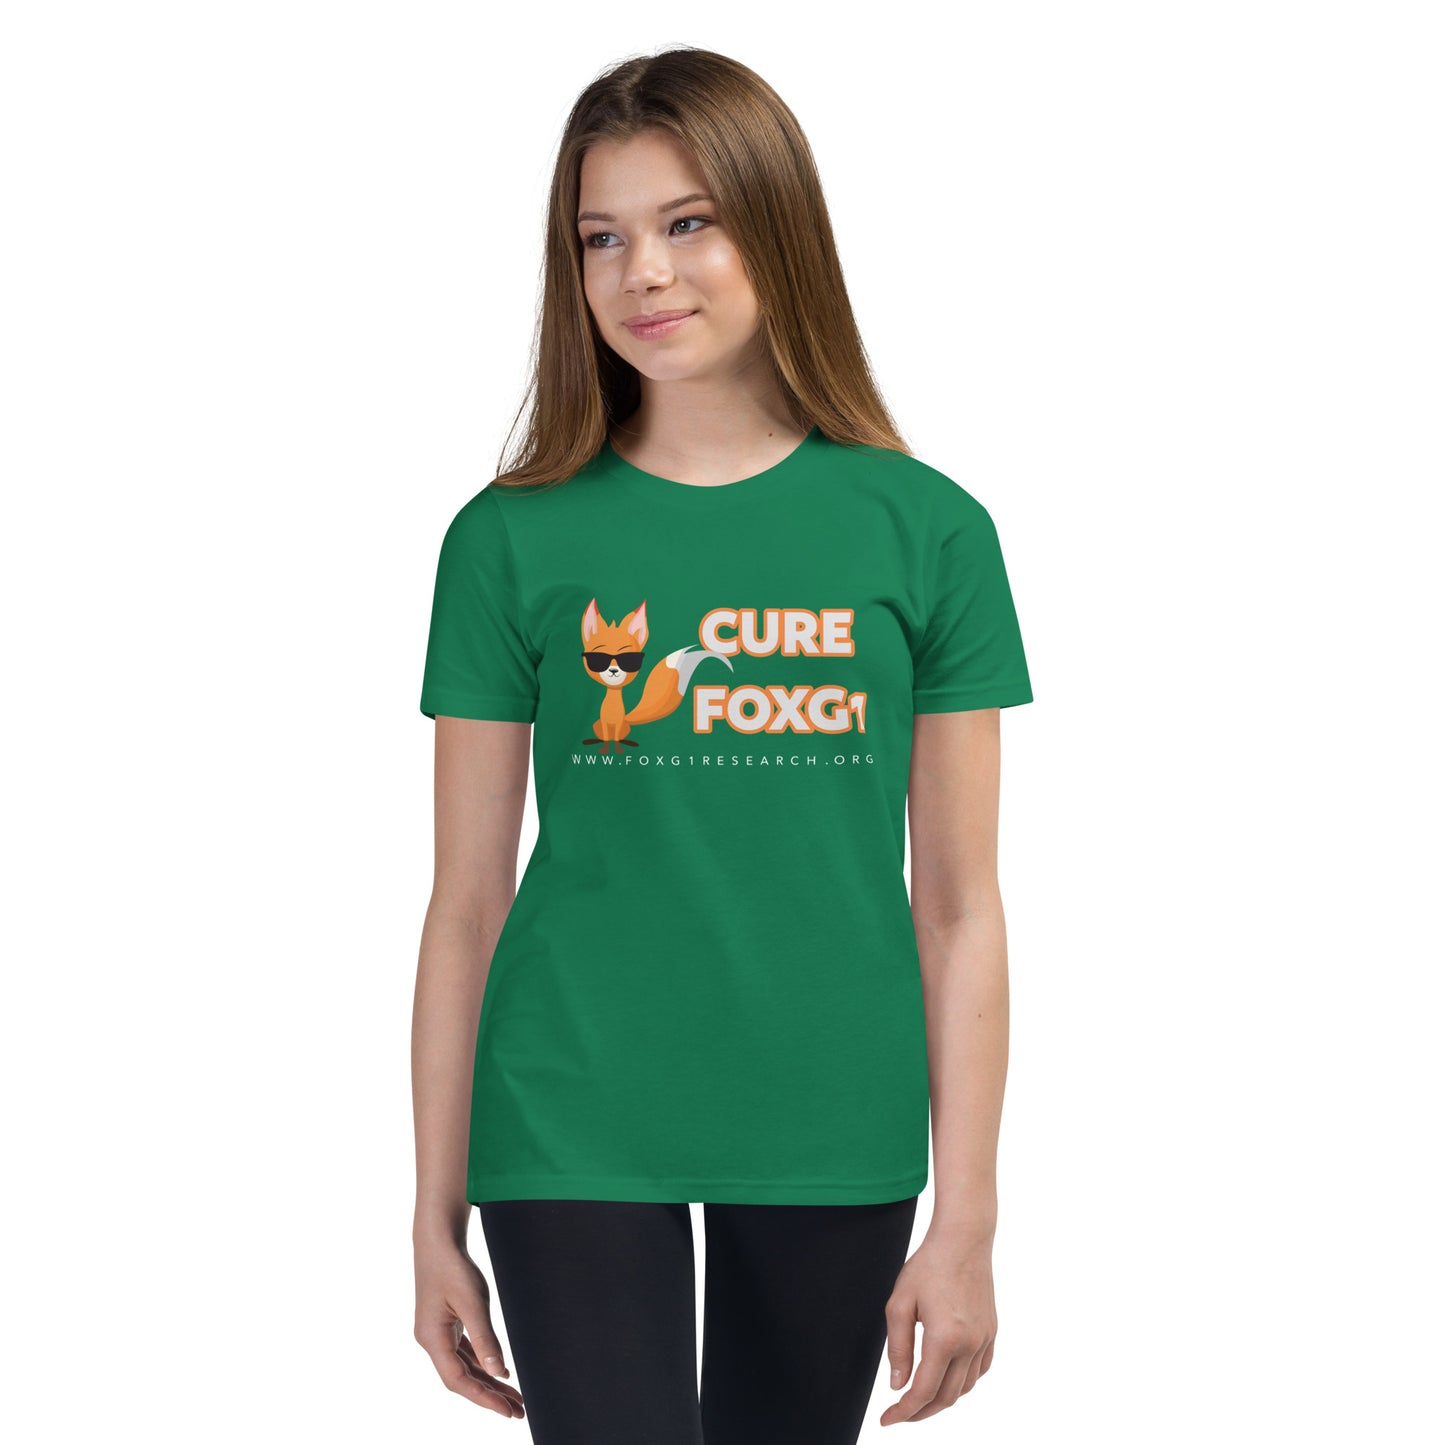 Cool Frankie Cure FOXG1 Youth Short Sleeve T-Shirt